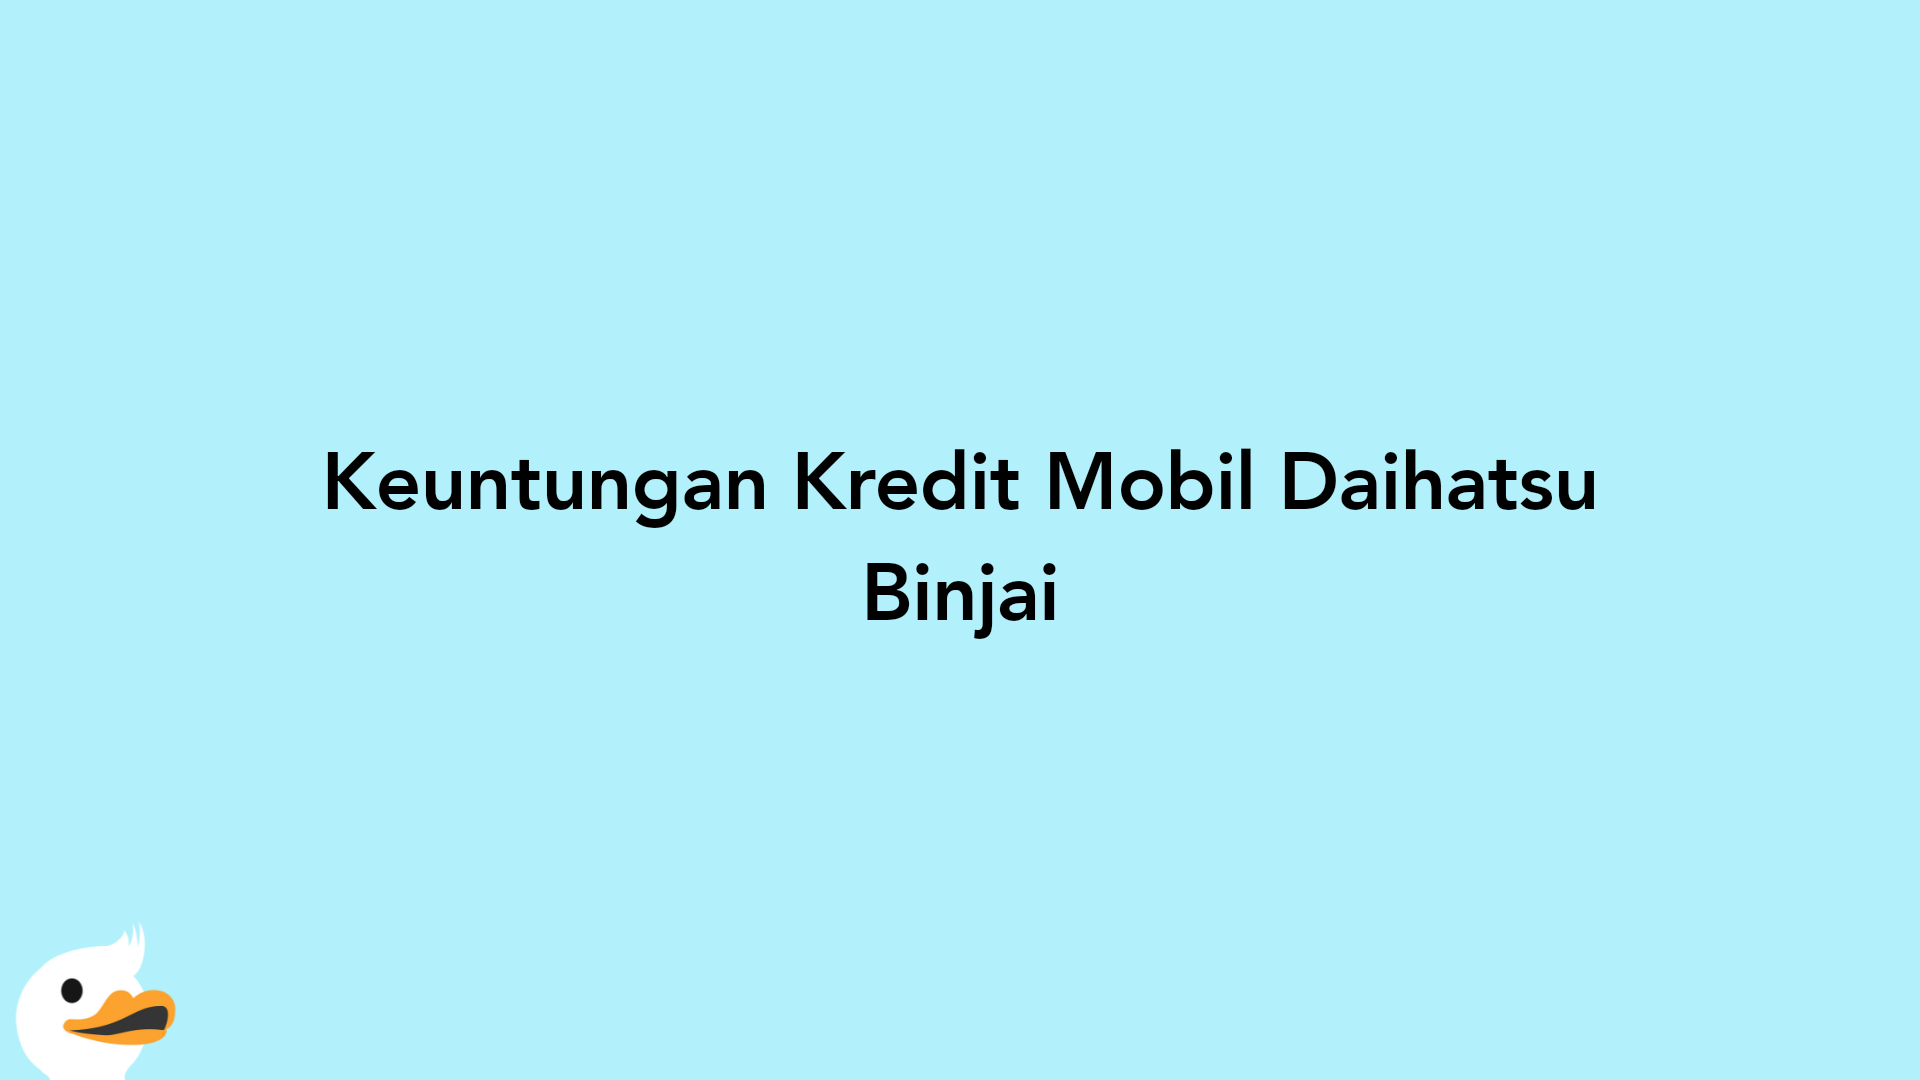 Keuntungan Kredit Mobil Daihatsu Binjai